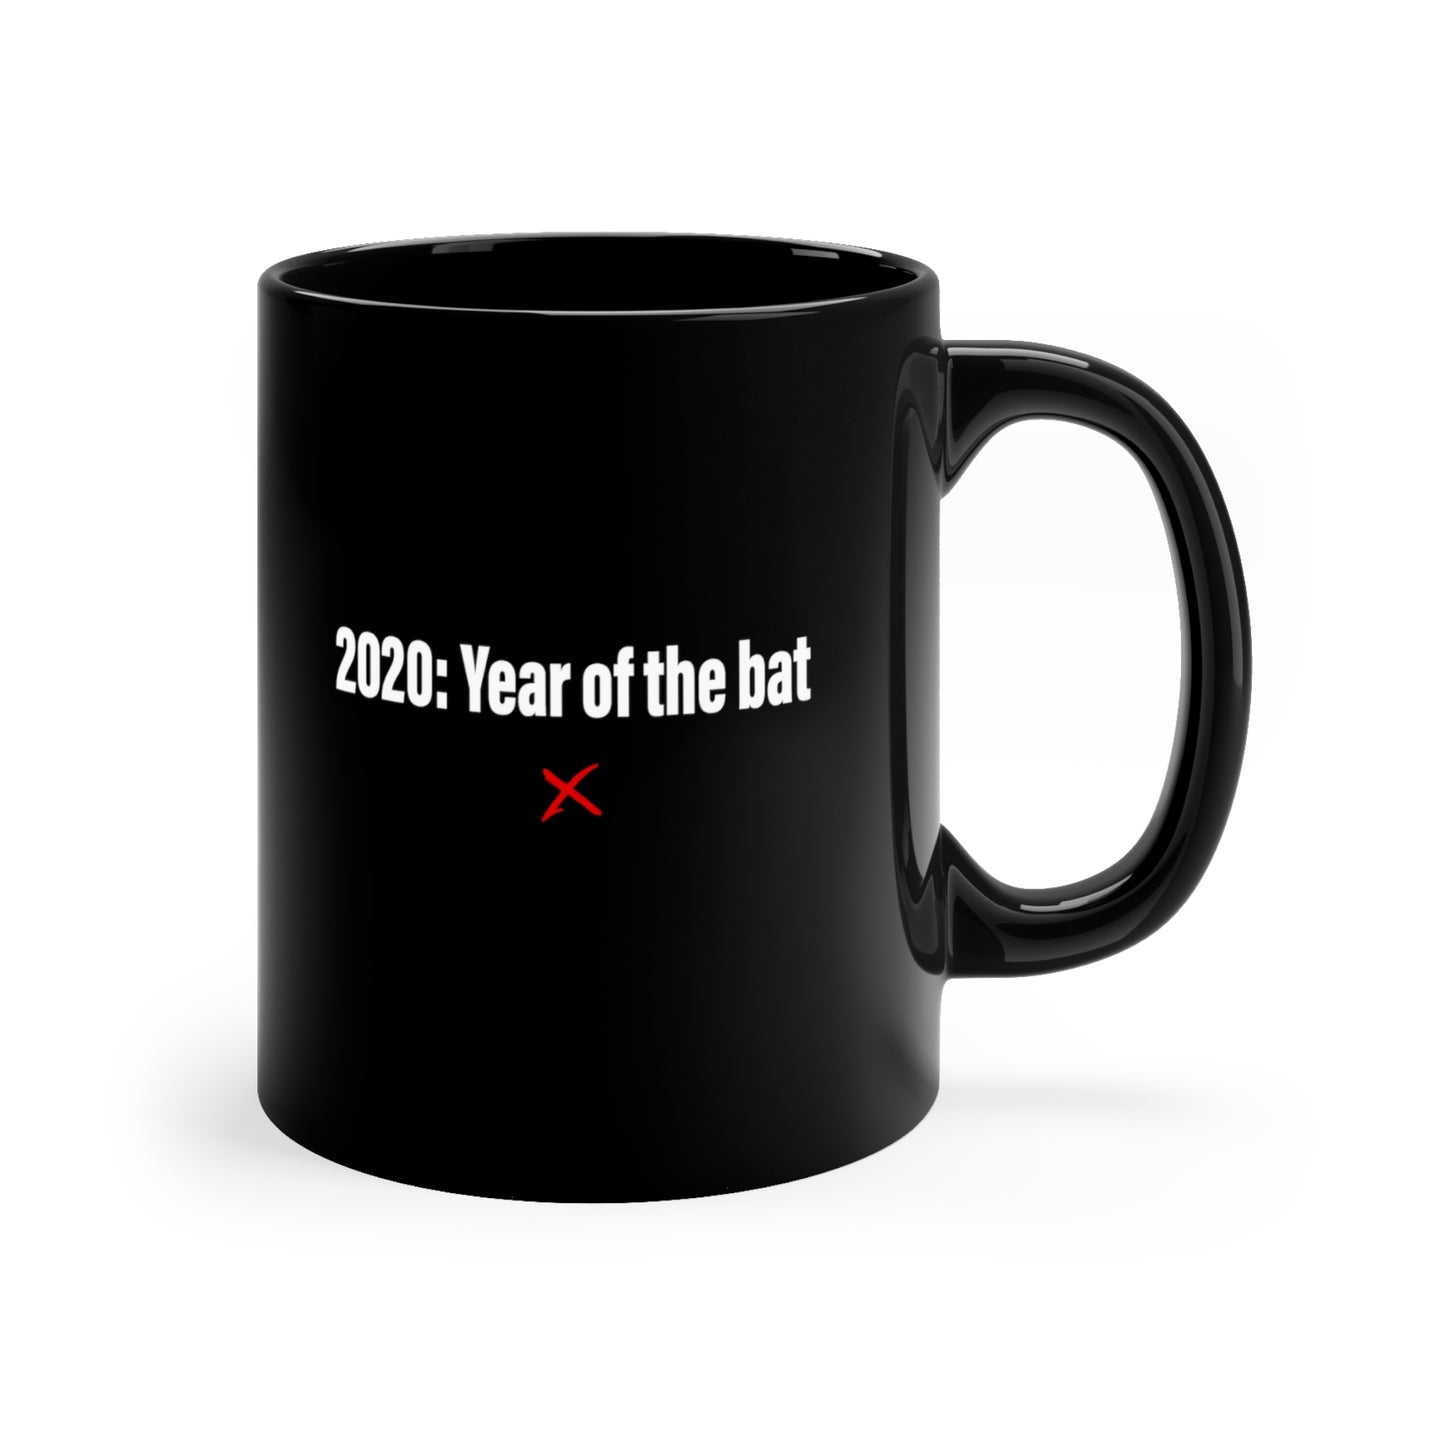 2020: Year of the bat - Mug